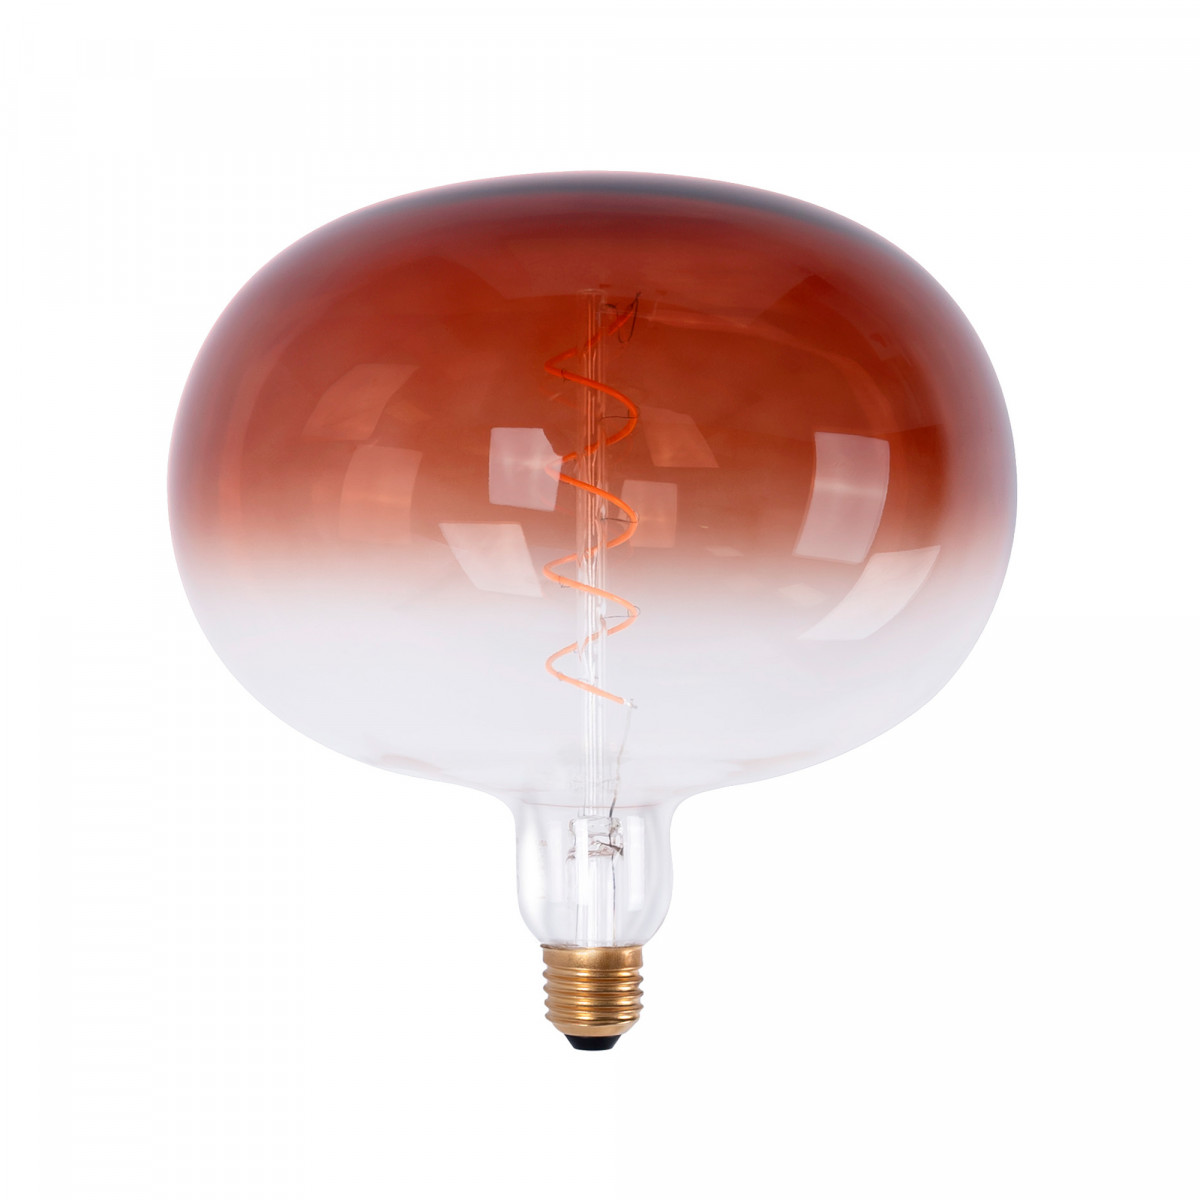 Decorative LED filament bulb "Decor - Brown" - E27 R220 - Dimmable - 4W - 1800K